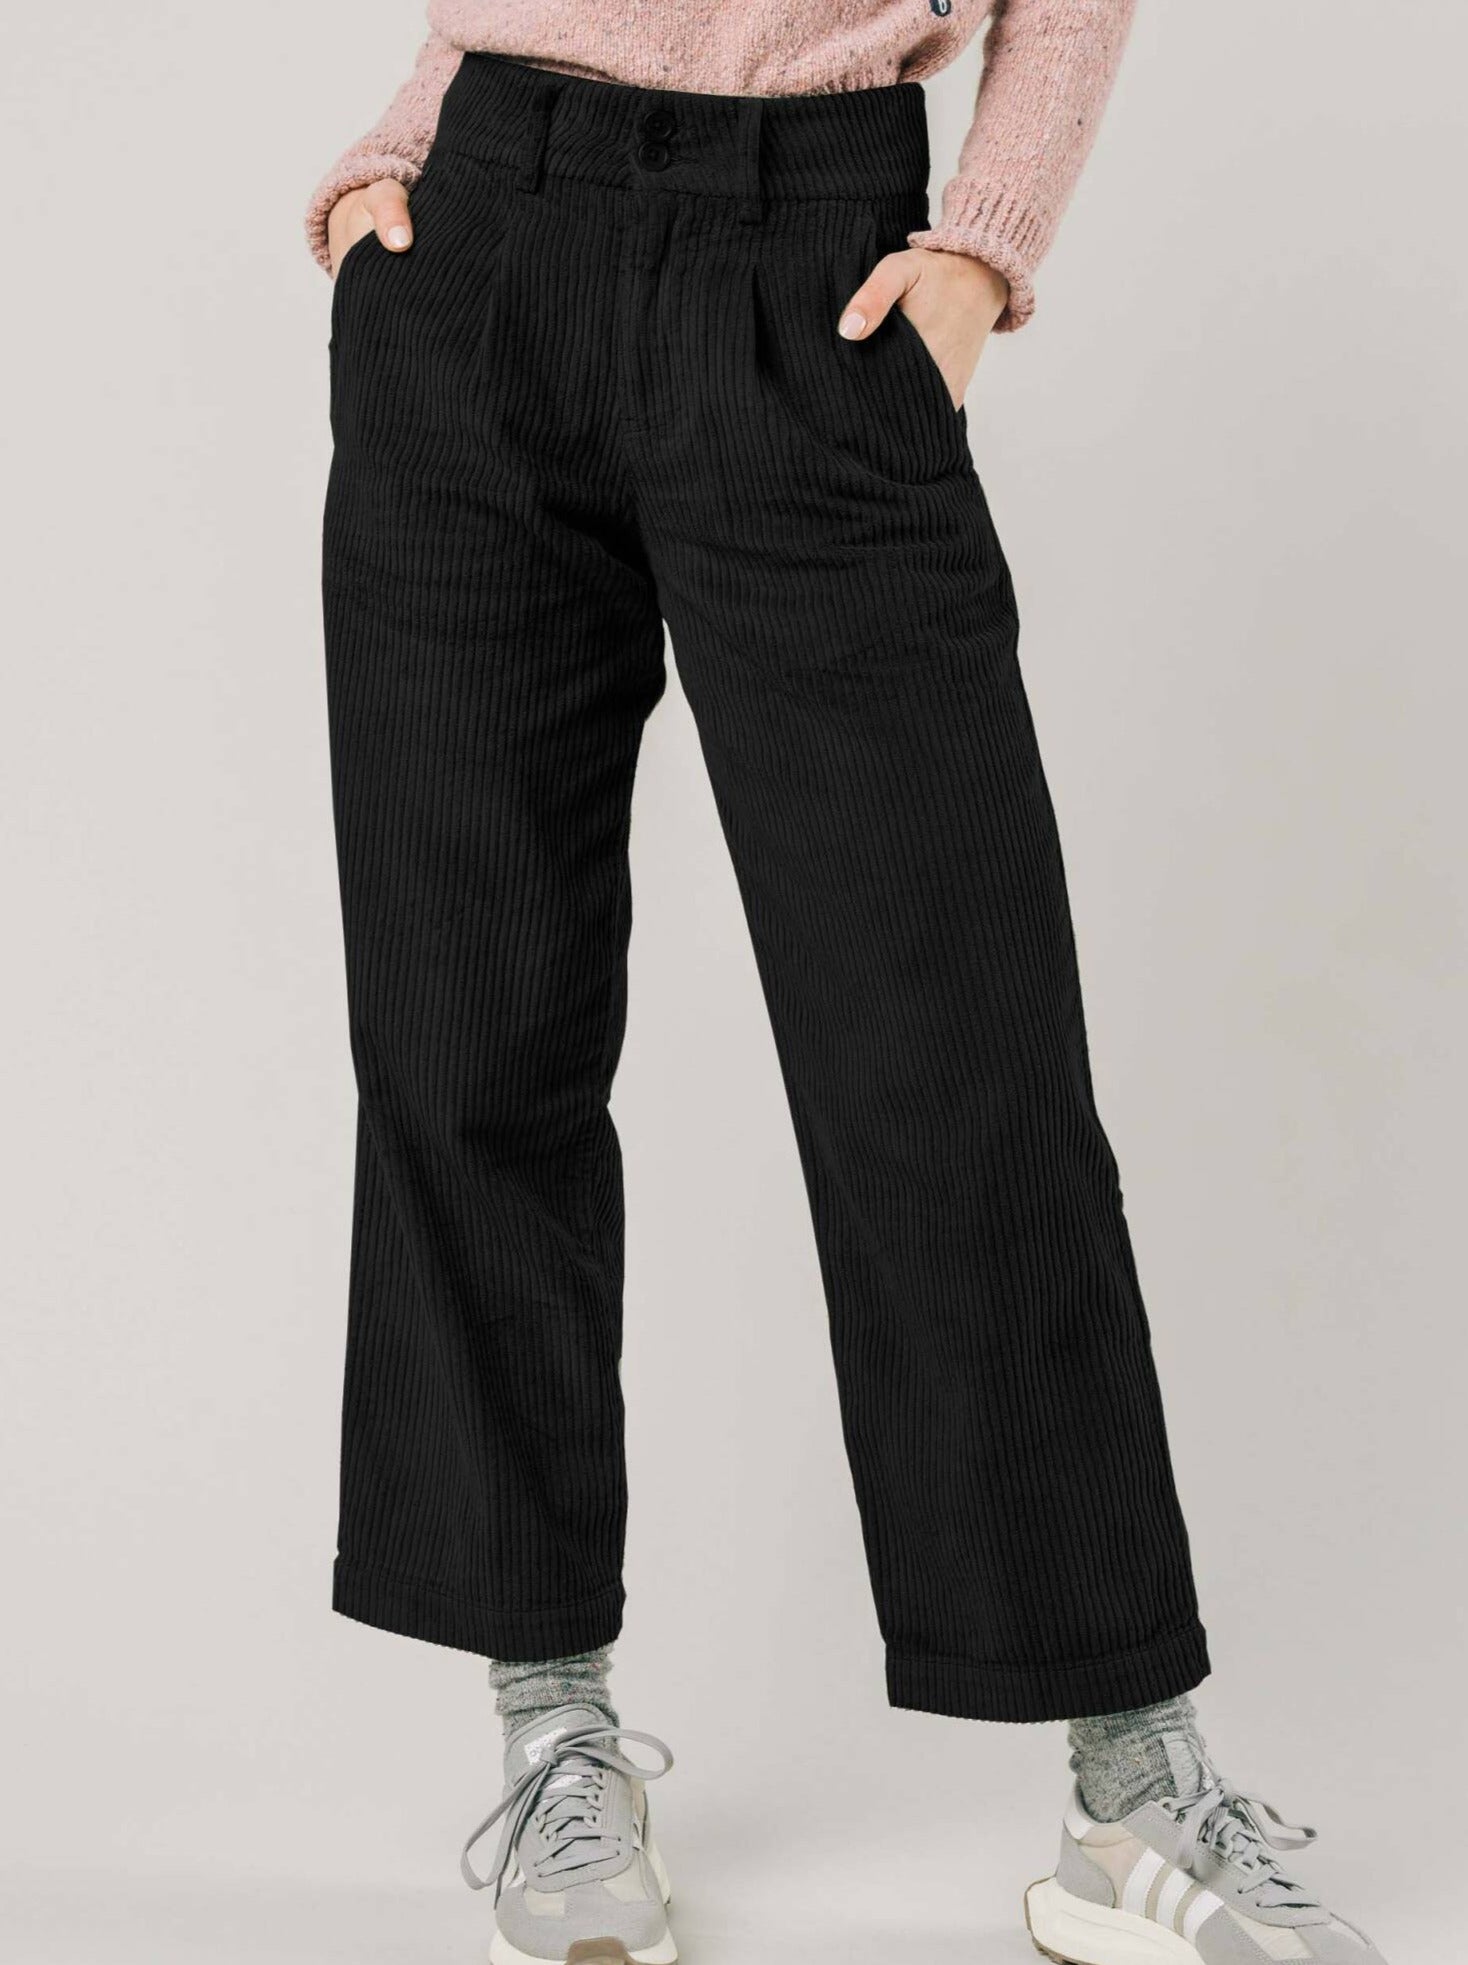 Brava Fabrics Pantalons Pantaló plisat de pana Negre moda sostenible moda ètica